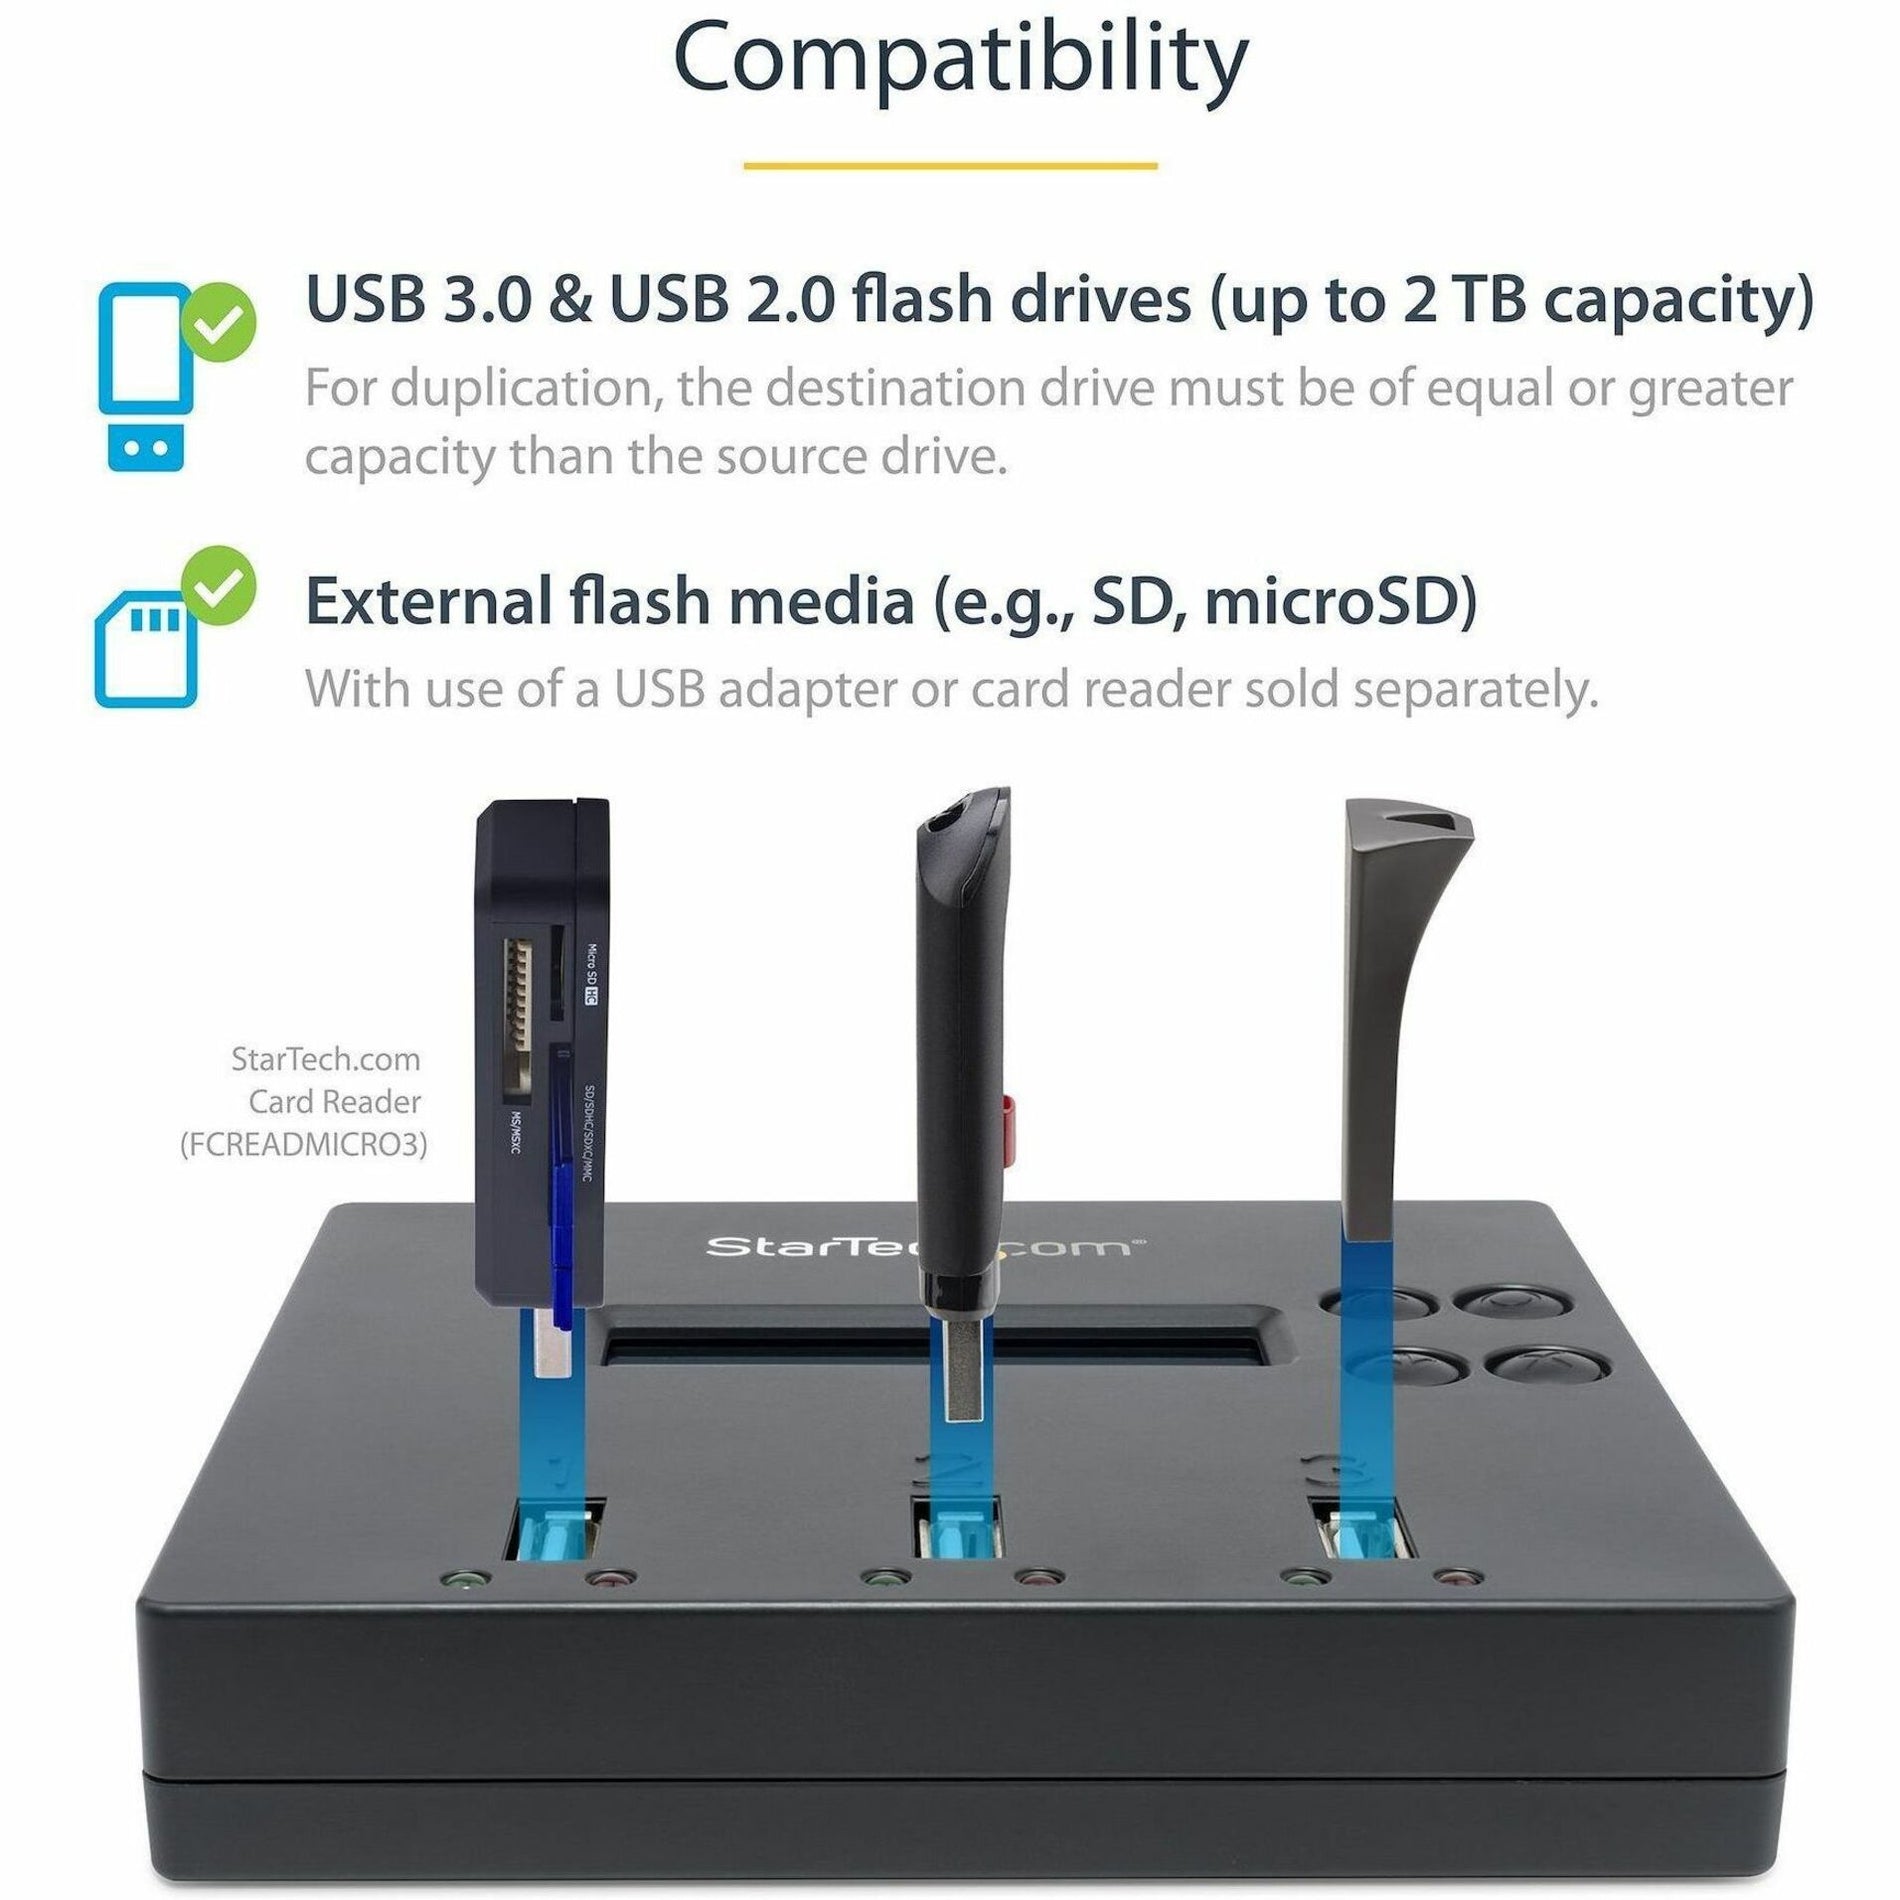 StarTech.com USBDUP12 1:2 Standalone USB 2.0 Flash Drive Duplicator and Eraser - Flash Drive Copier, TAA Compliant, 2-Year Warranty